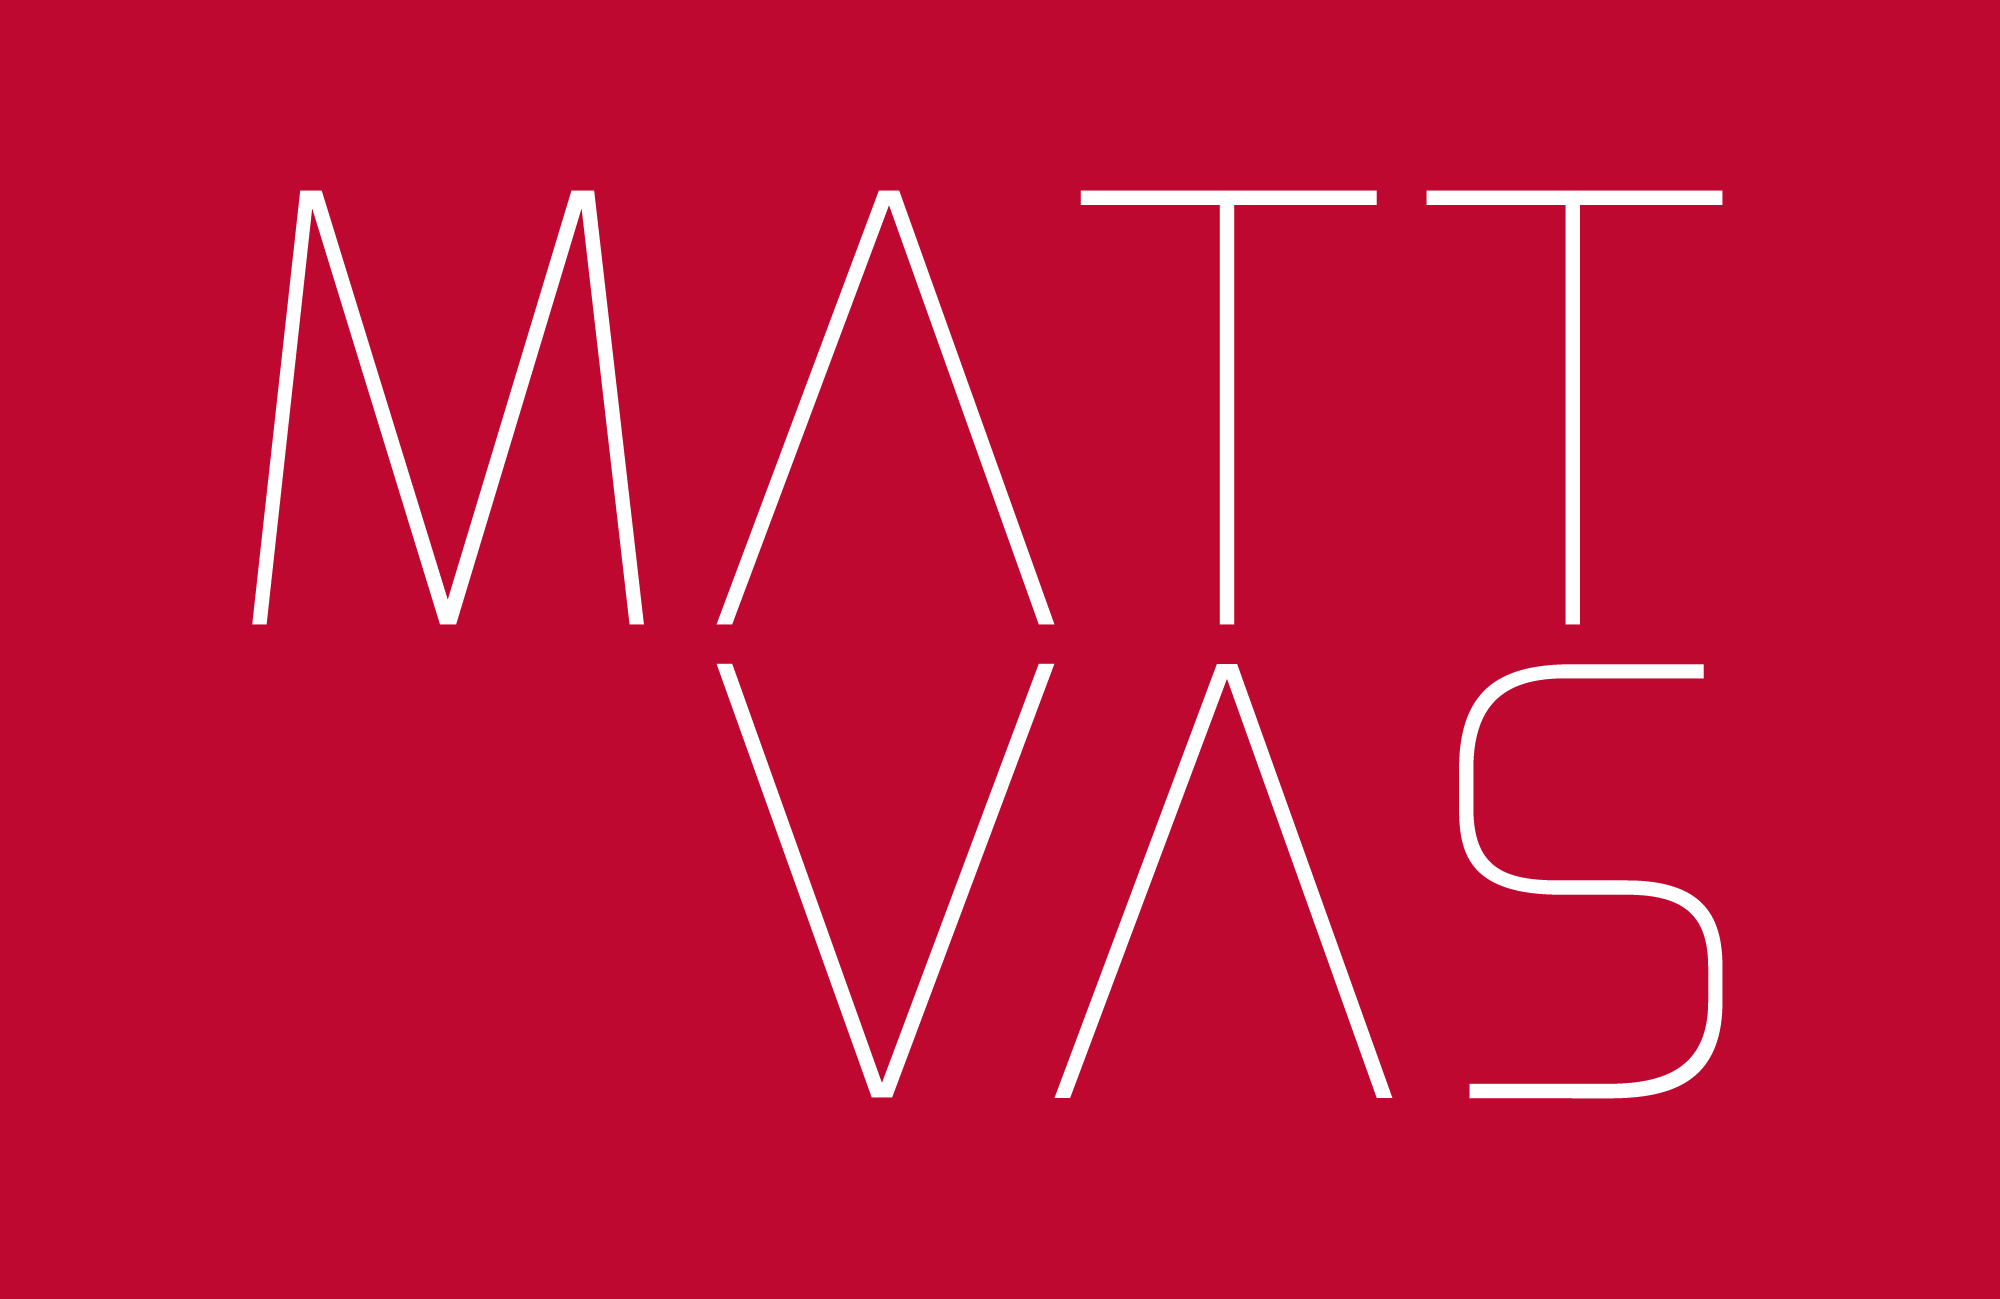 Mattvas's Blog